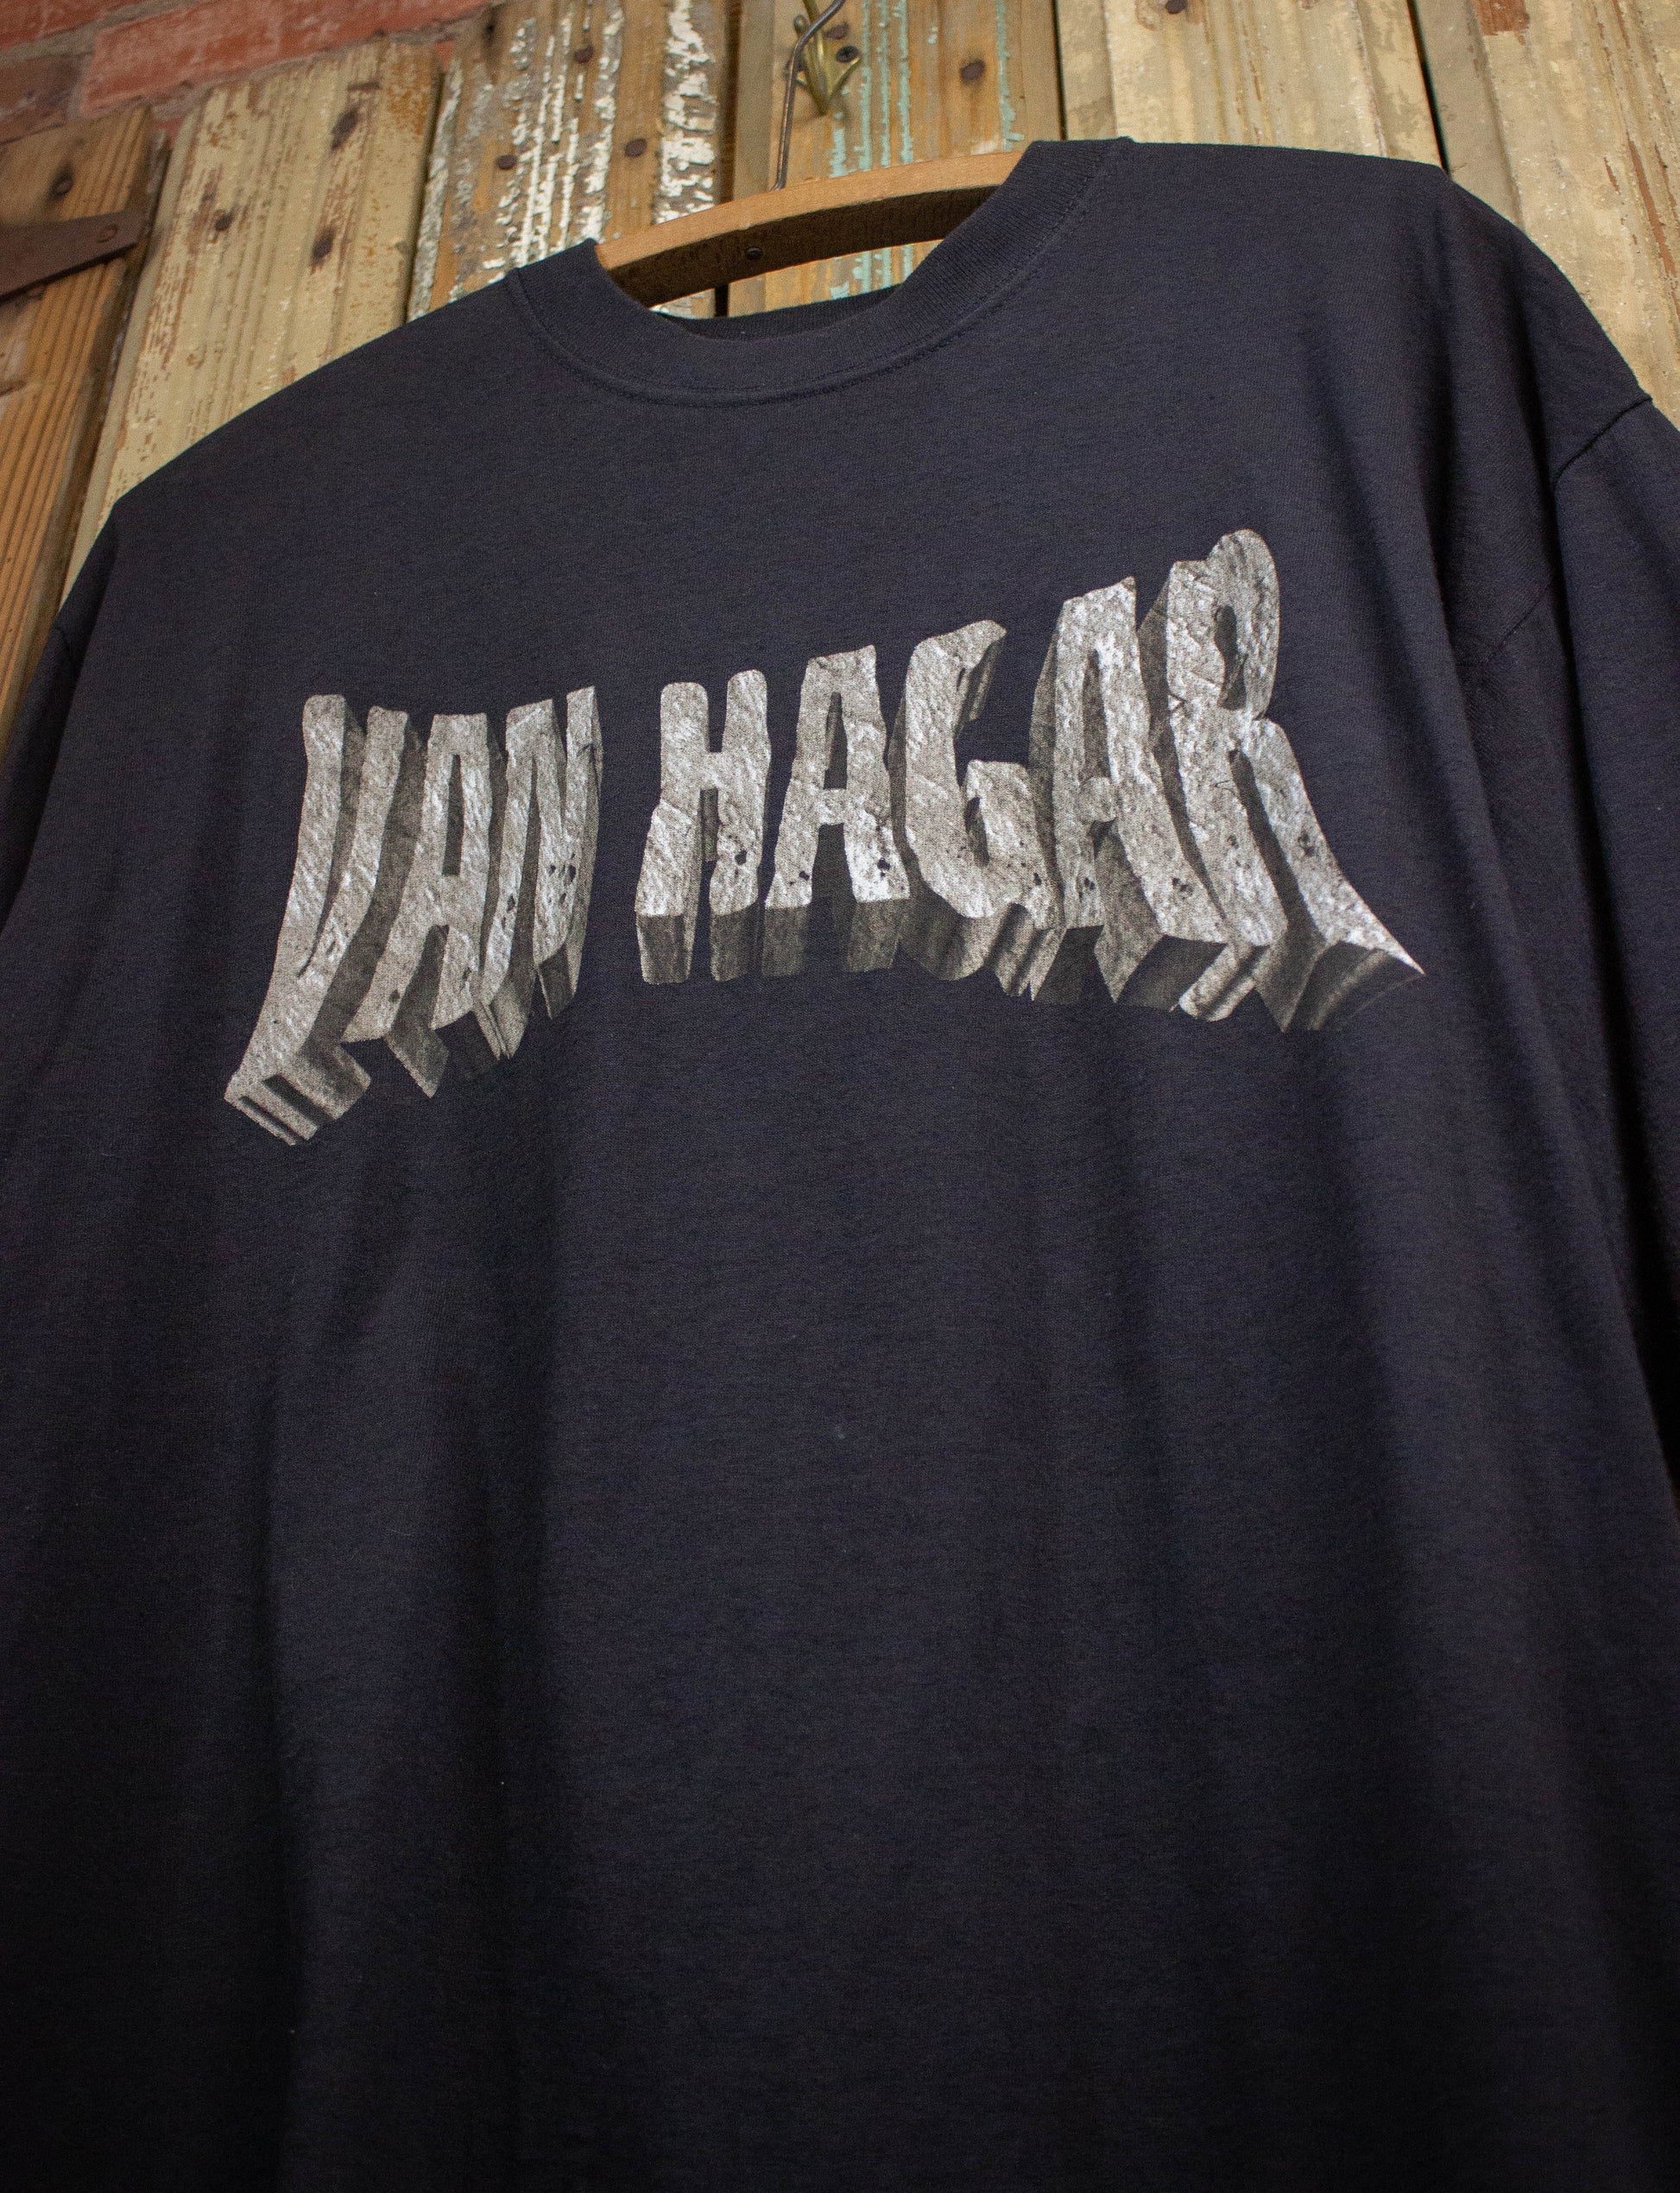 Vintage Van Hagar Concert T Shirt 2002 Black Large